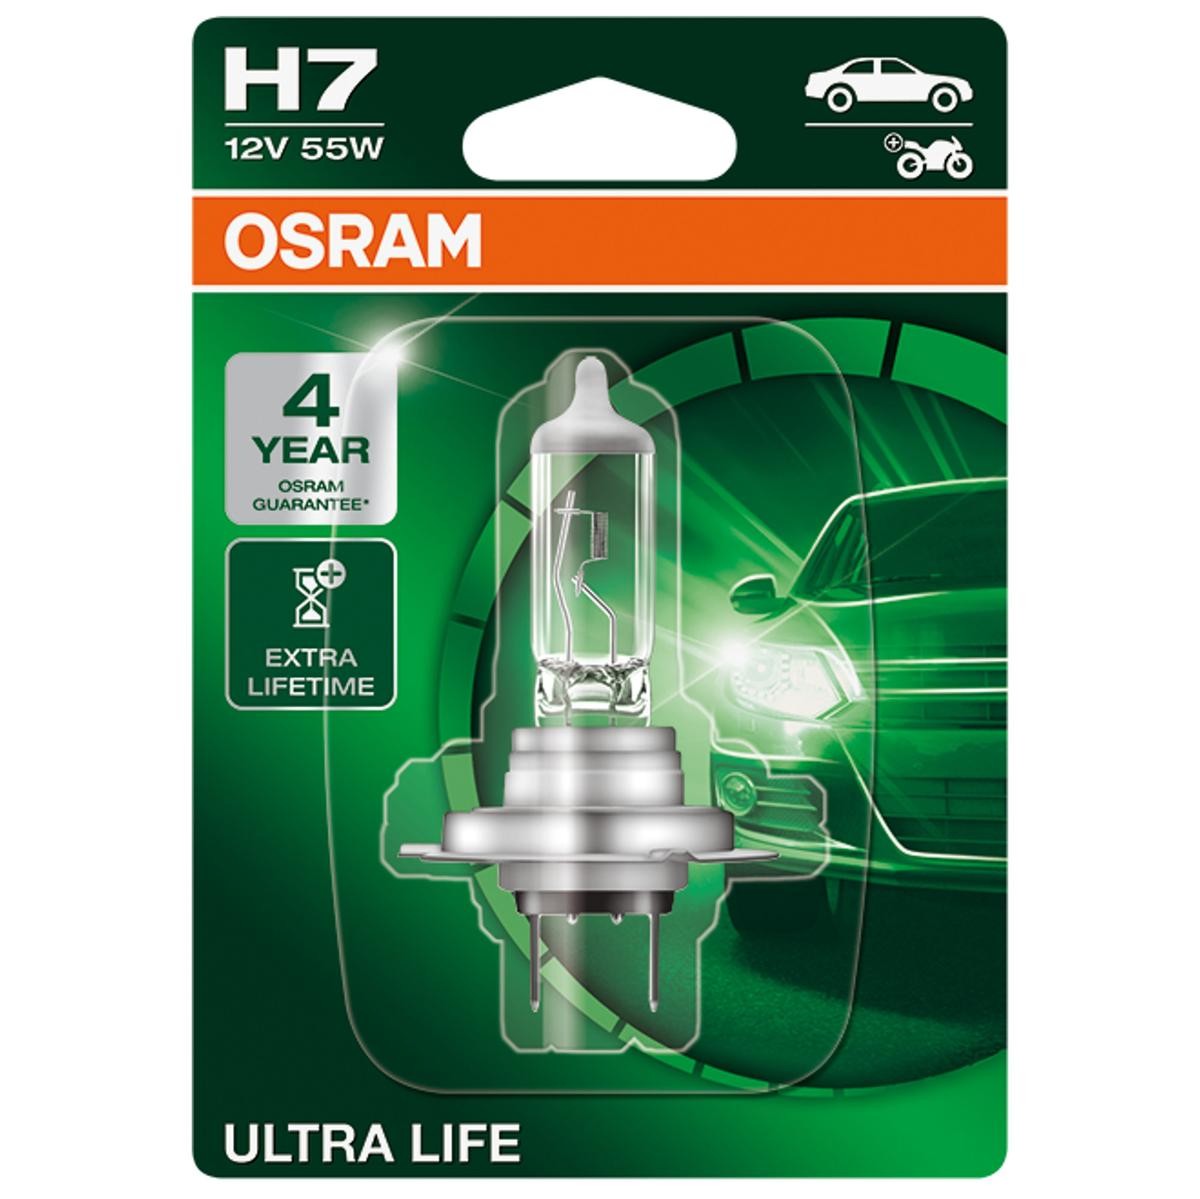 OSRAM H7 12V 55W ➤ AUTODOC